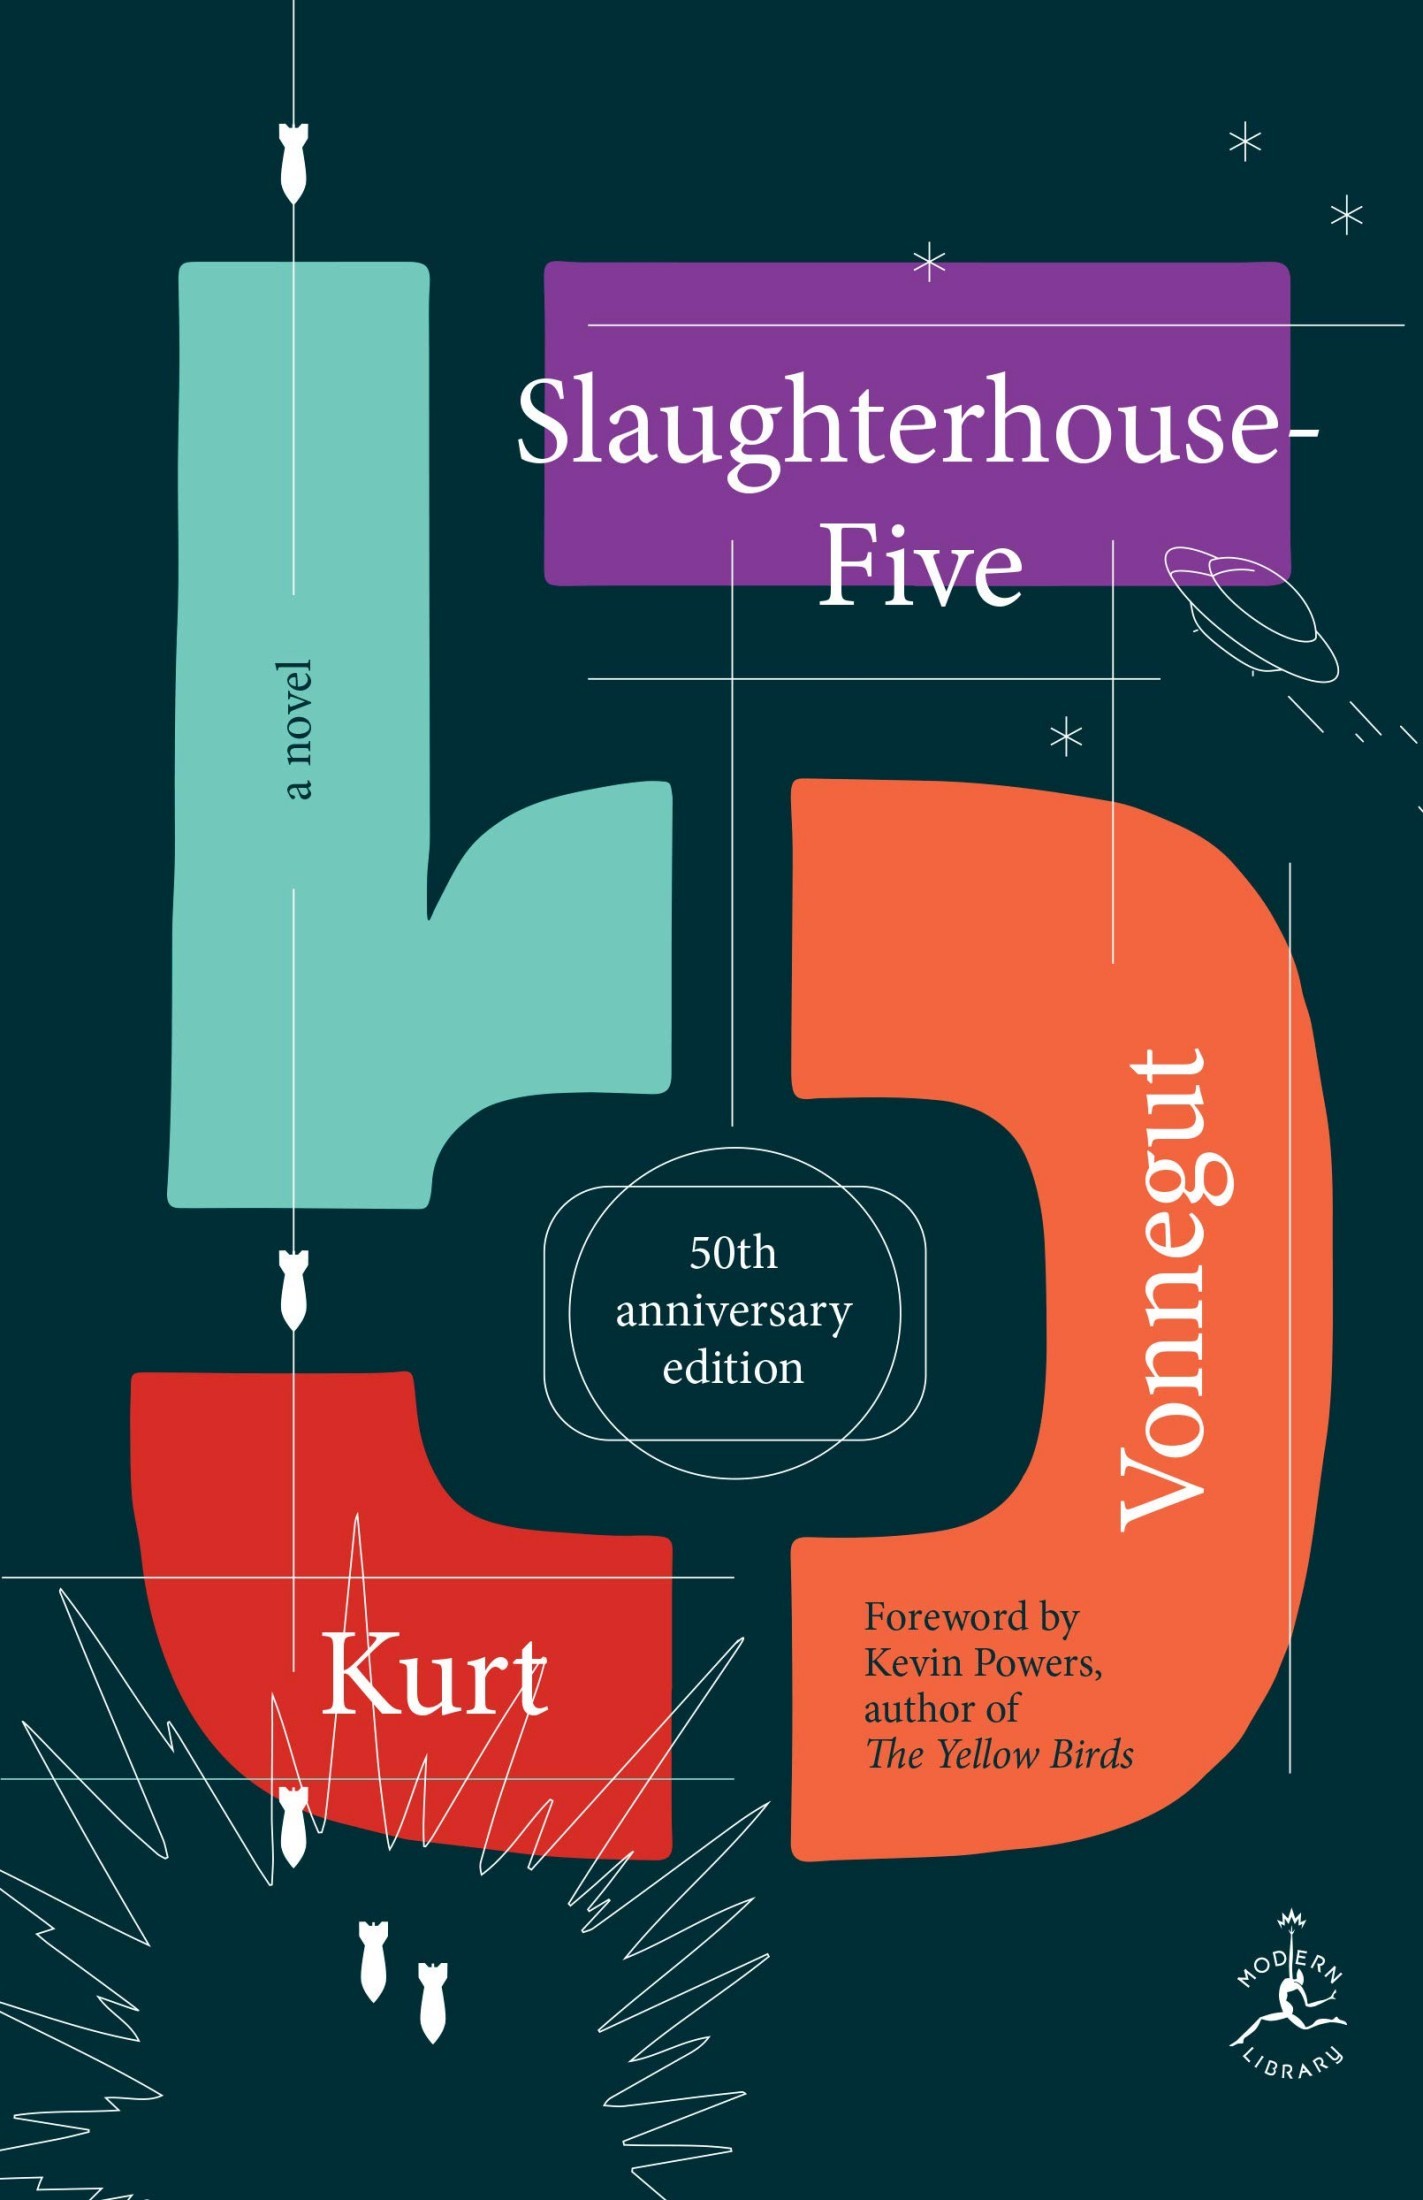 Slaughterhouse-Five (AudiobookFormat, 1969)